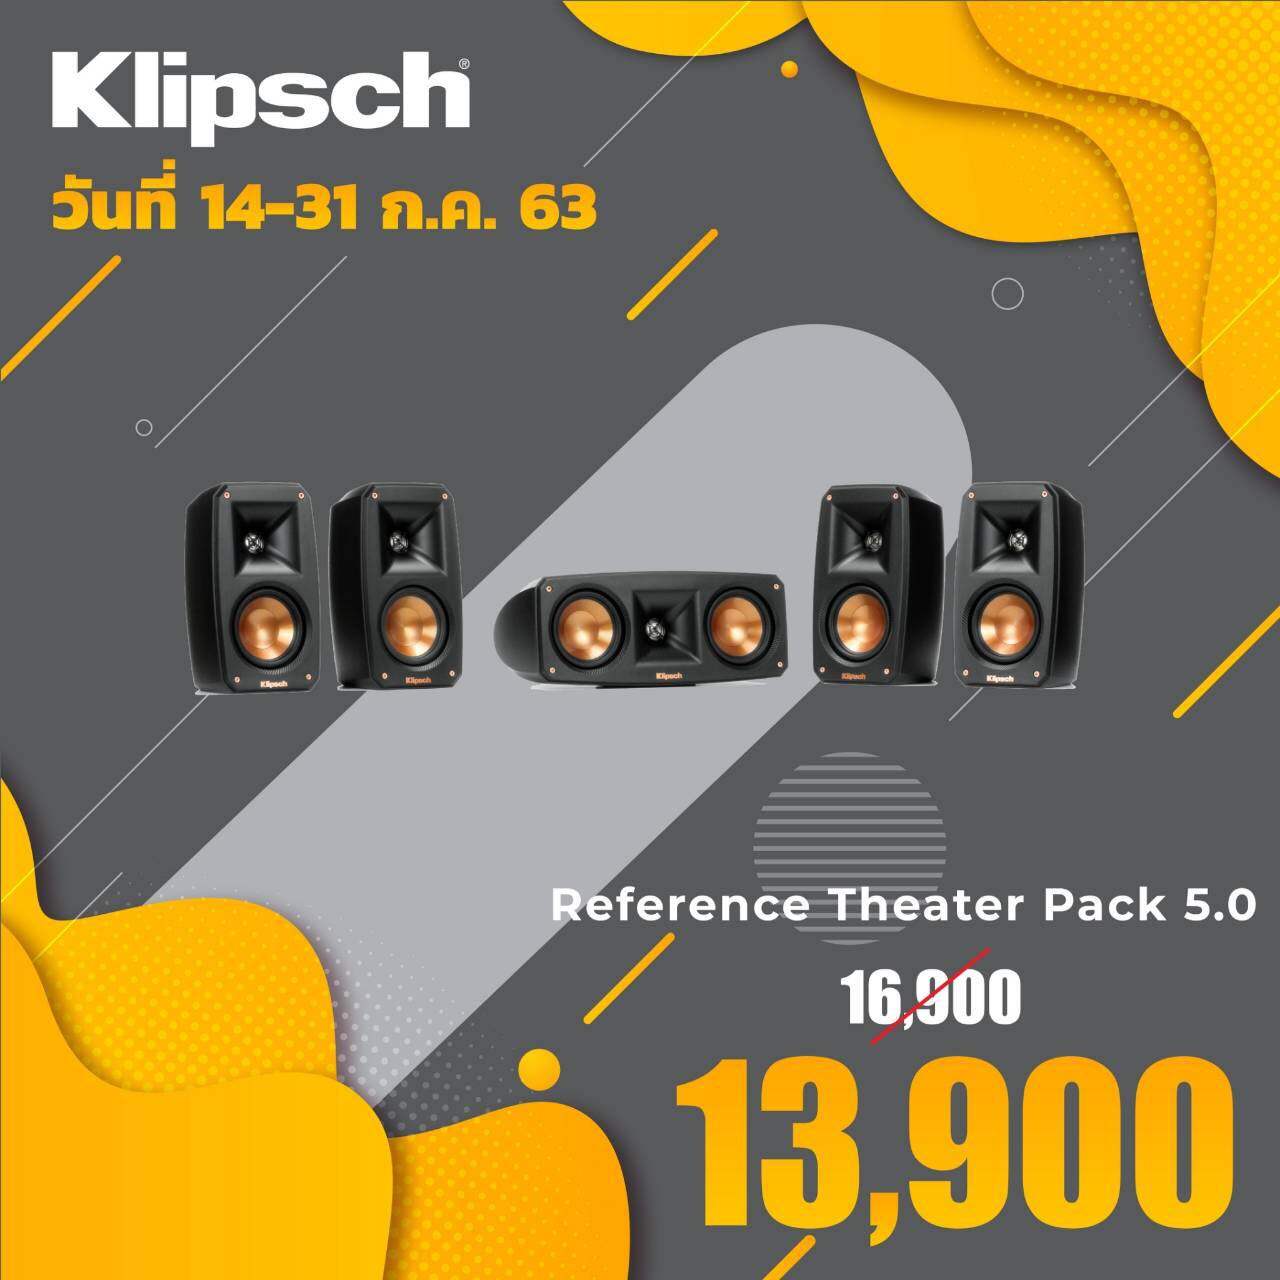 Klipsch Reference Theater Pack 5.0 ลำโพงระบบ 5.0 ใหม่จาก Klipsch รับประกันศูนย์ SoundRepublic 1 ปี